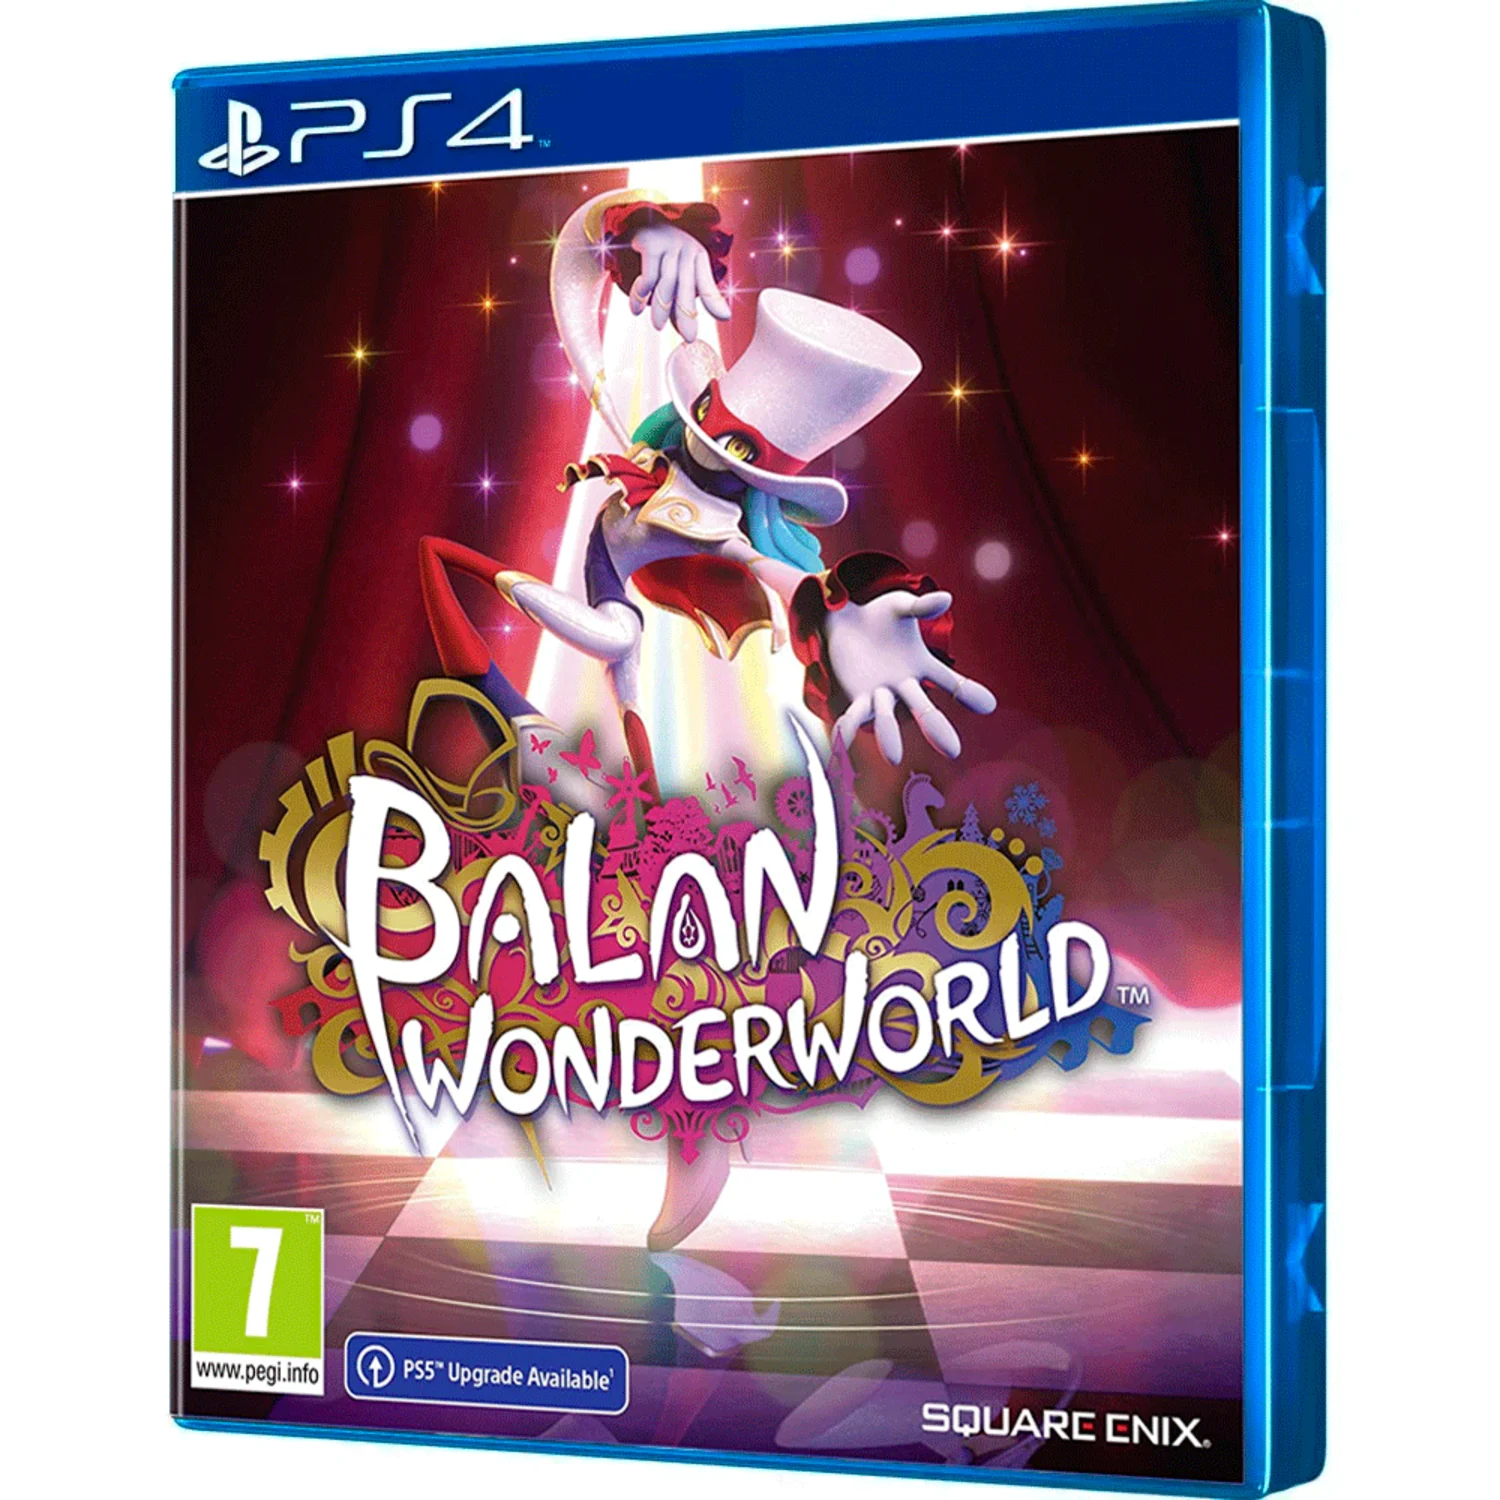 Jogo Balan Wonderworld PS4